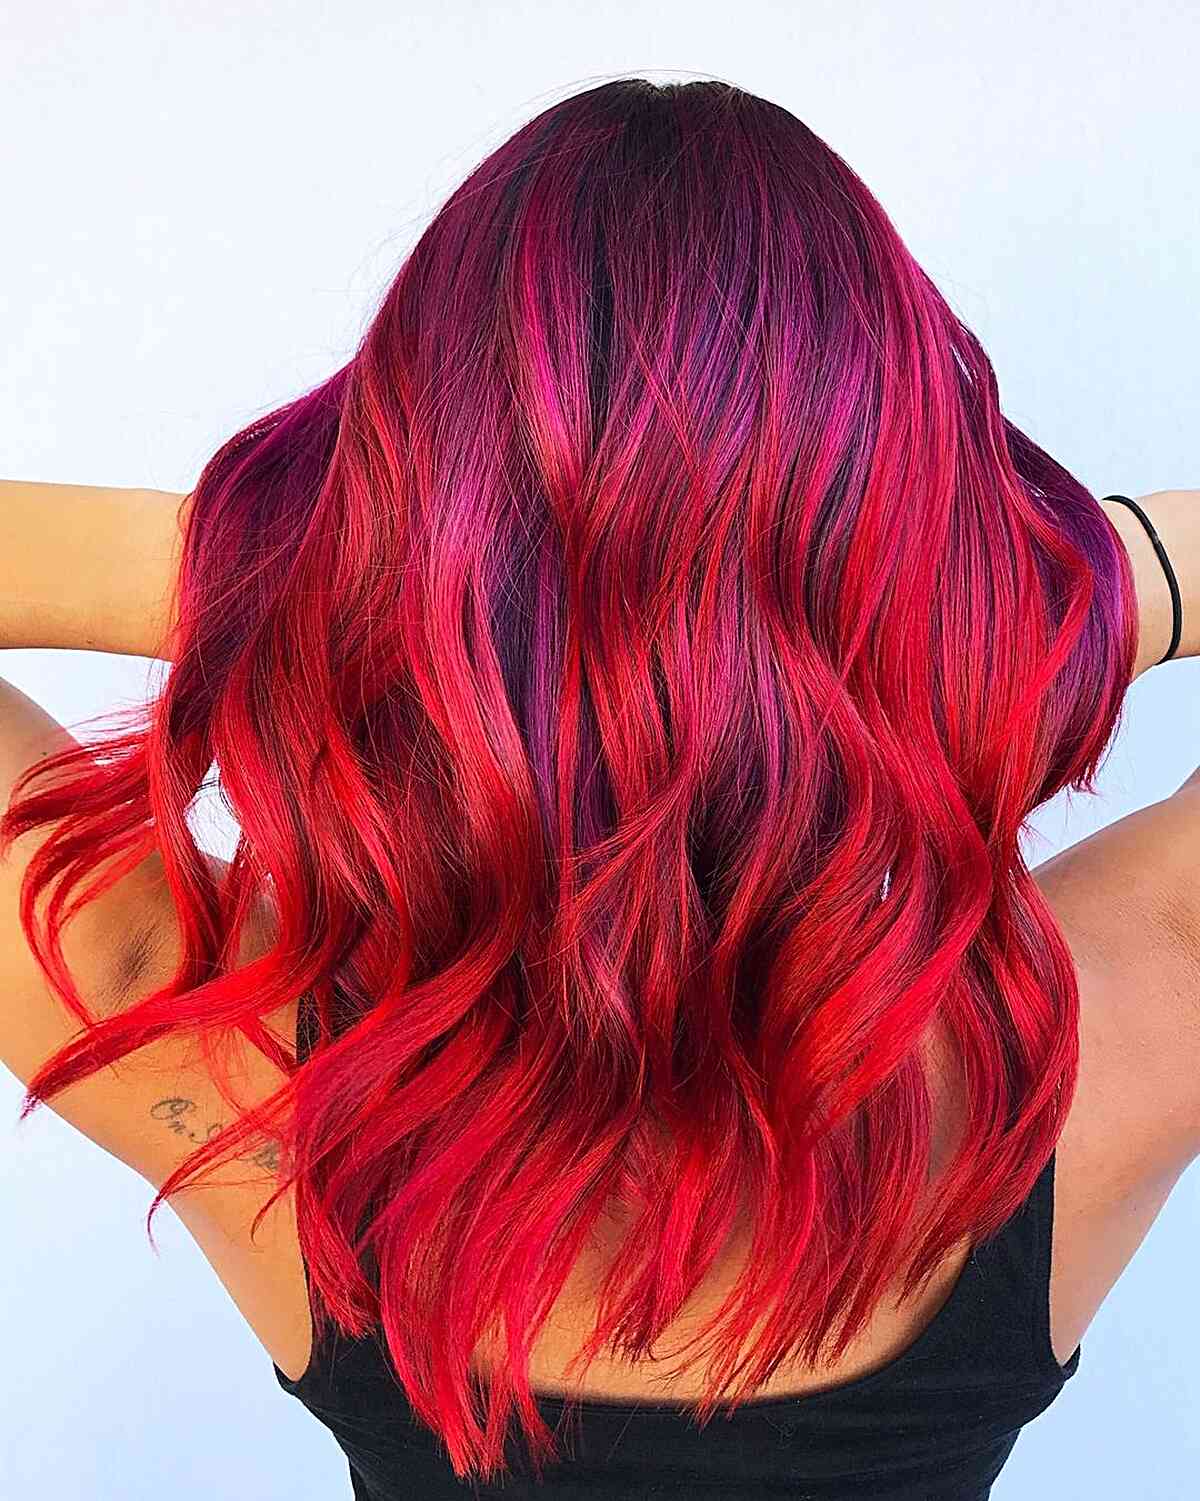 Stunning Bright and Vivid Red Balayage Hair Color on medium-length wavy hair